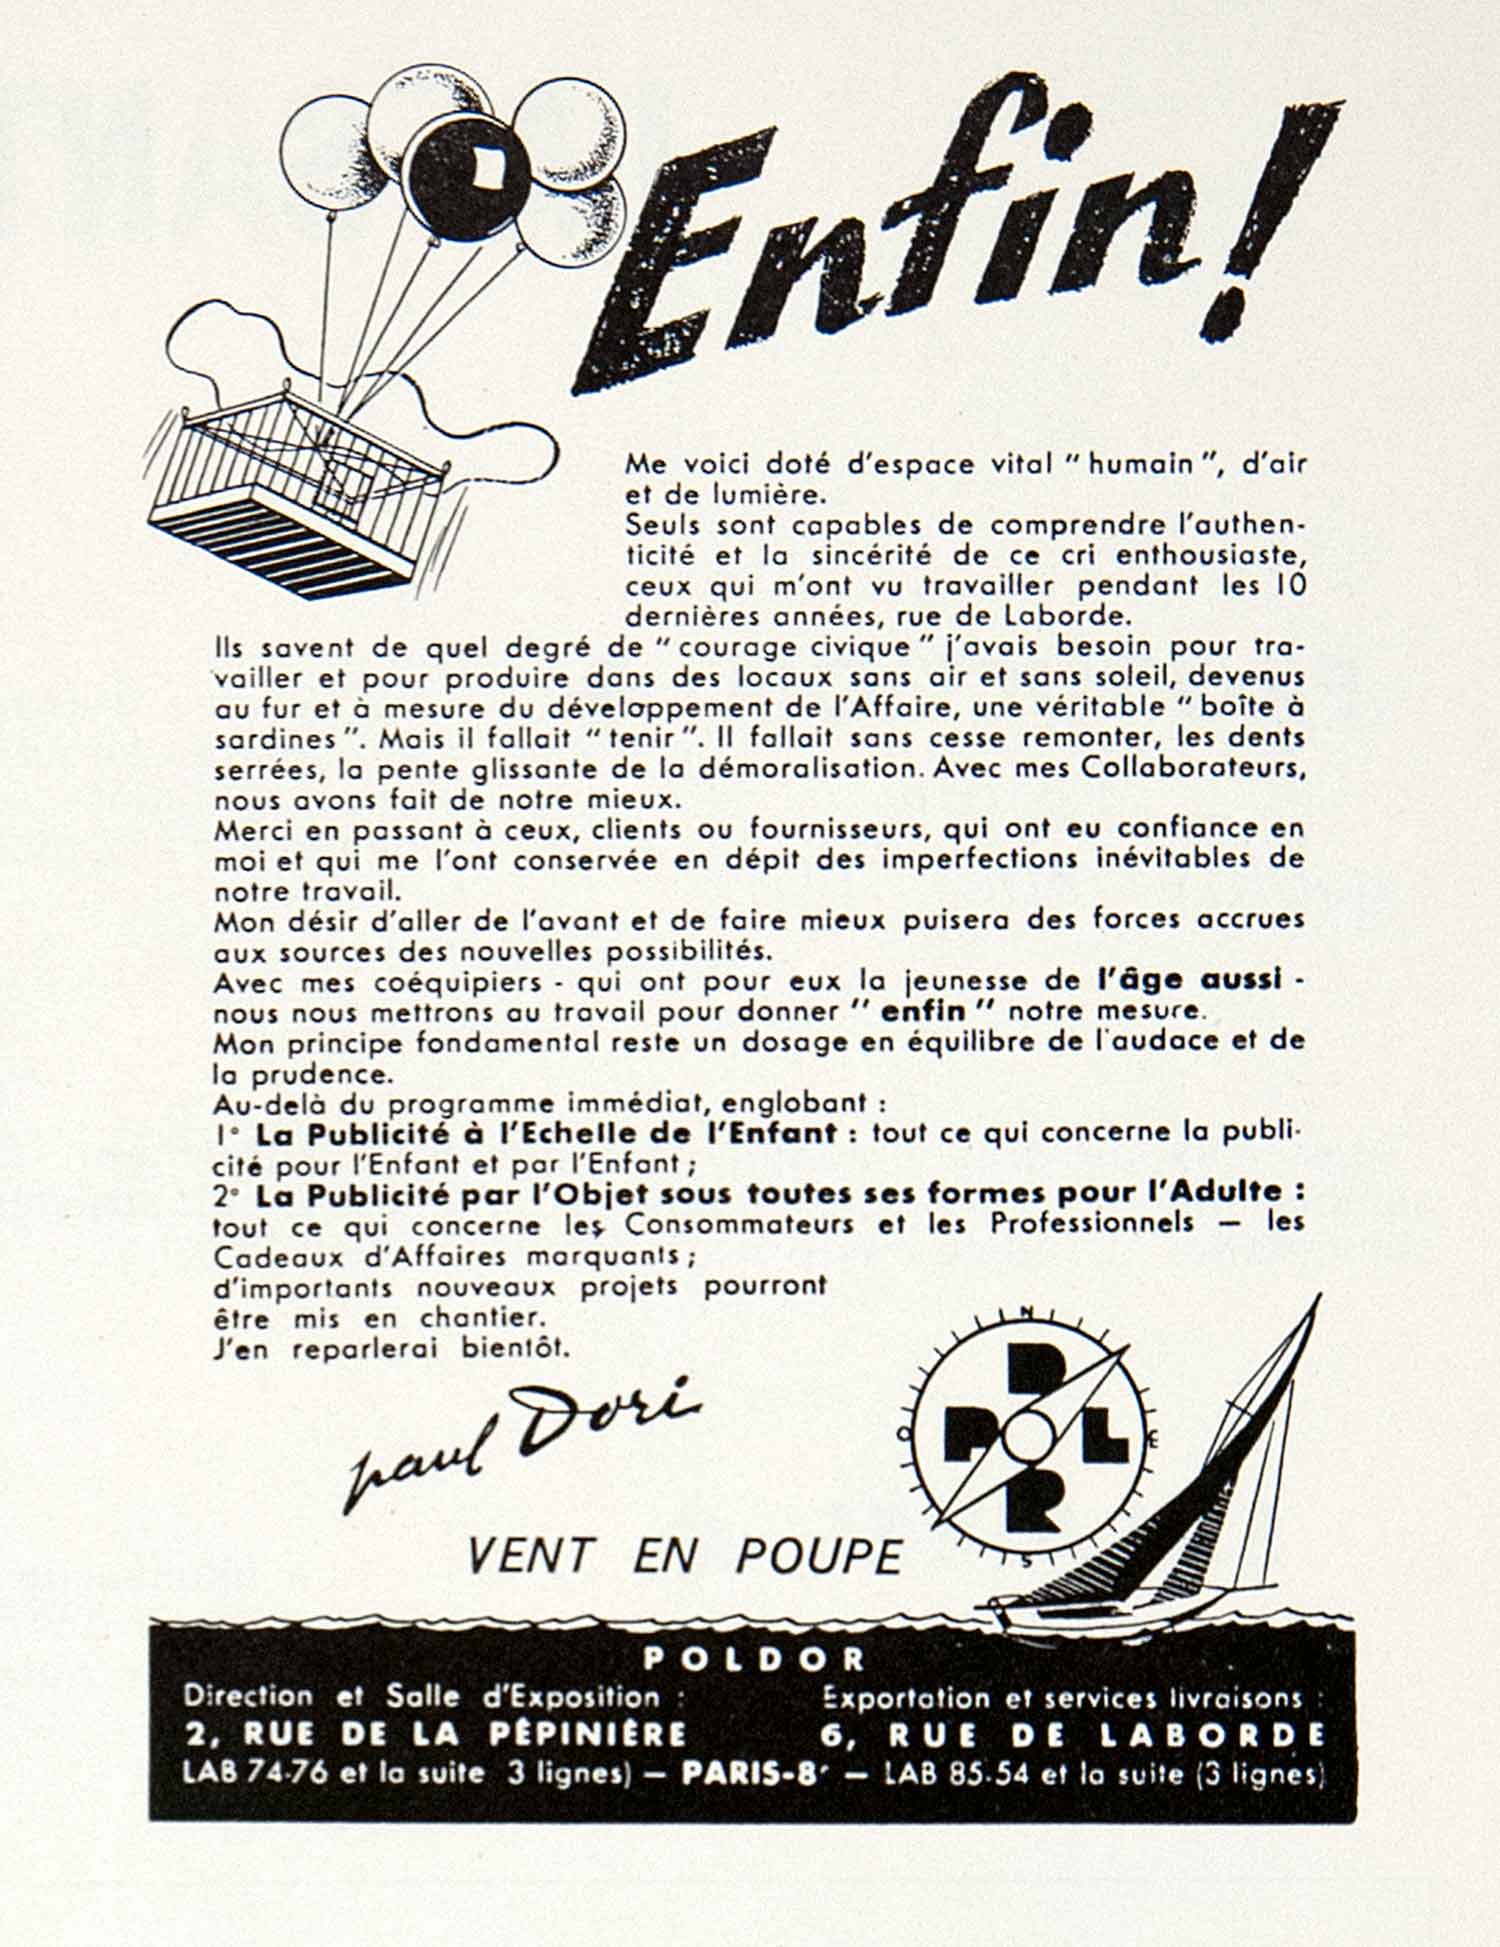 1955 Ad French France Advertising Advertisement Poldor Rue de Laborde VEN2